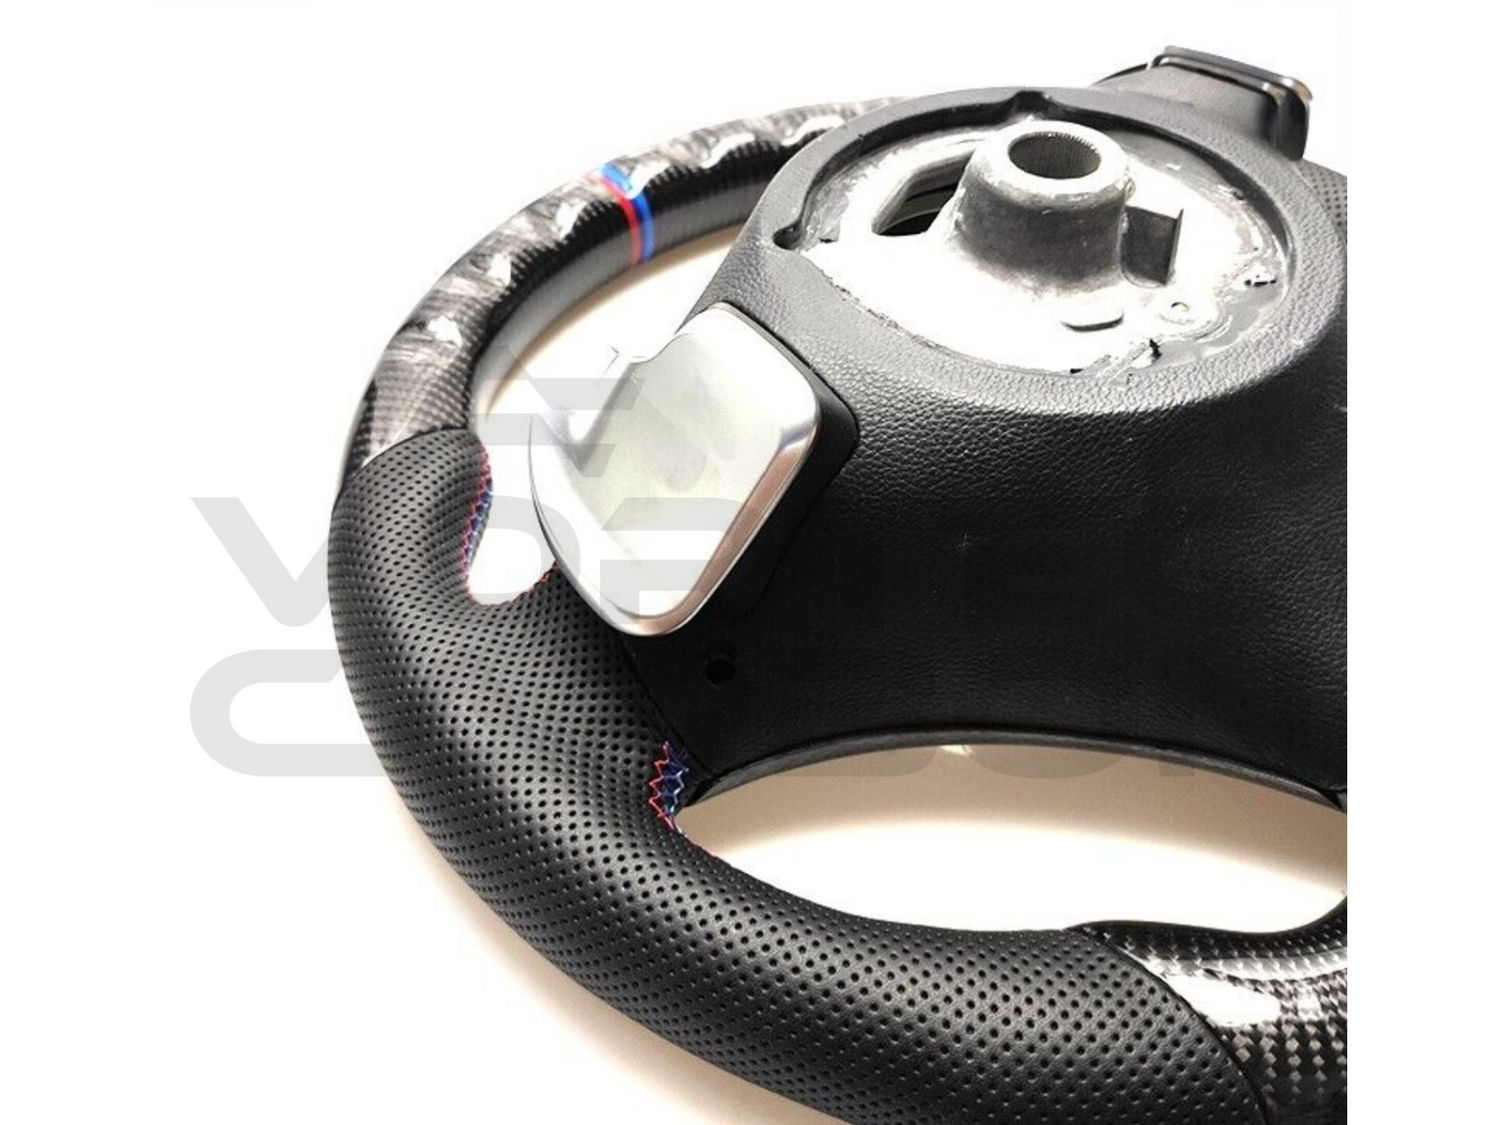 Fully Custom Carbon Fiber Steering Wheel - BMW E Chassis